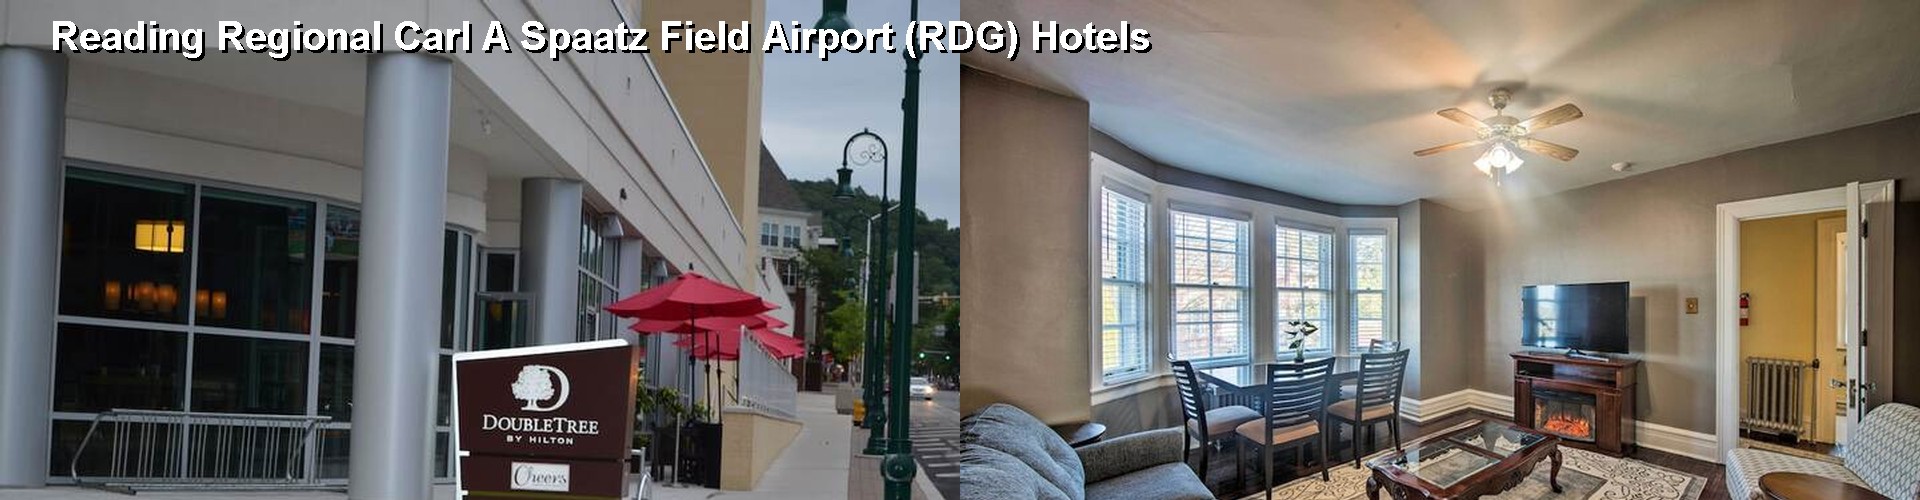 5 Best Hotels near Reading Regional Carl A Spaatz Field Airport (RDG)